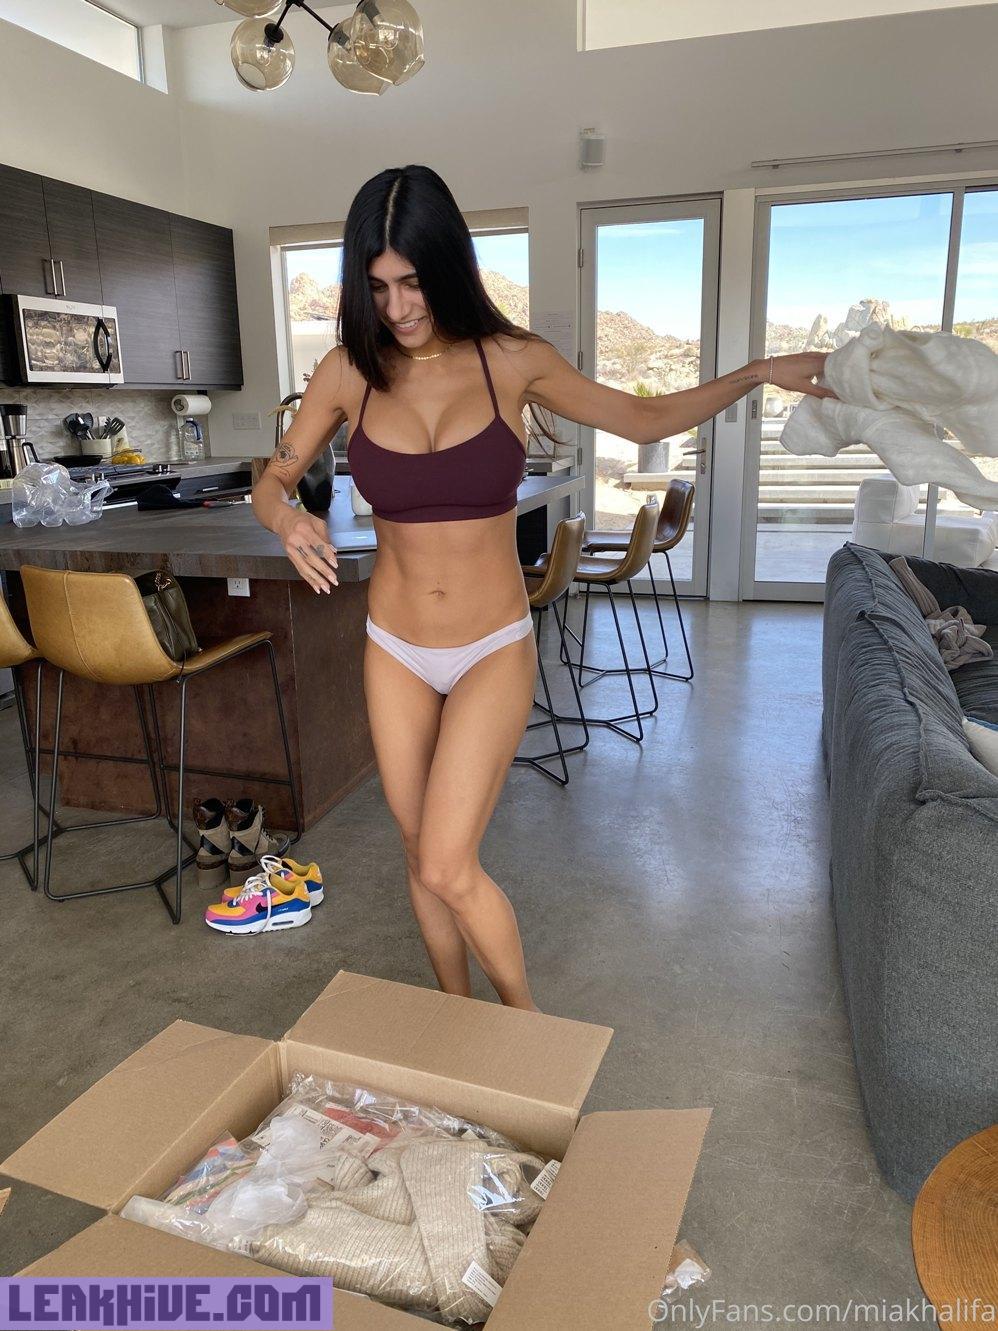 Mia khalifa nude kitchen strip onlyfans video leaked